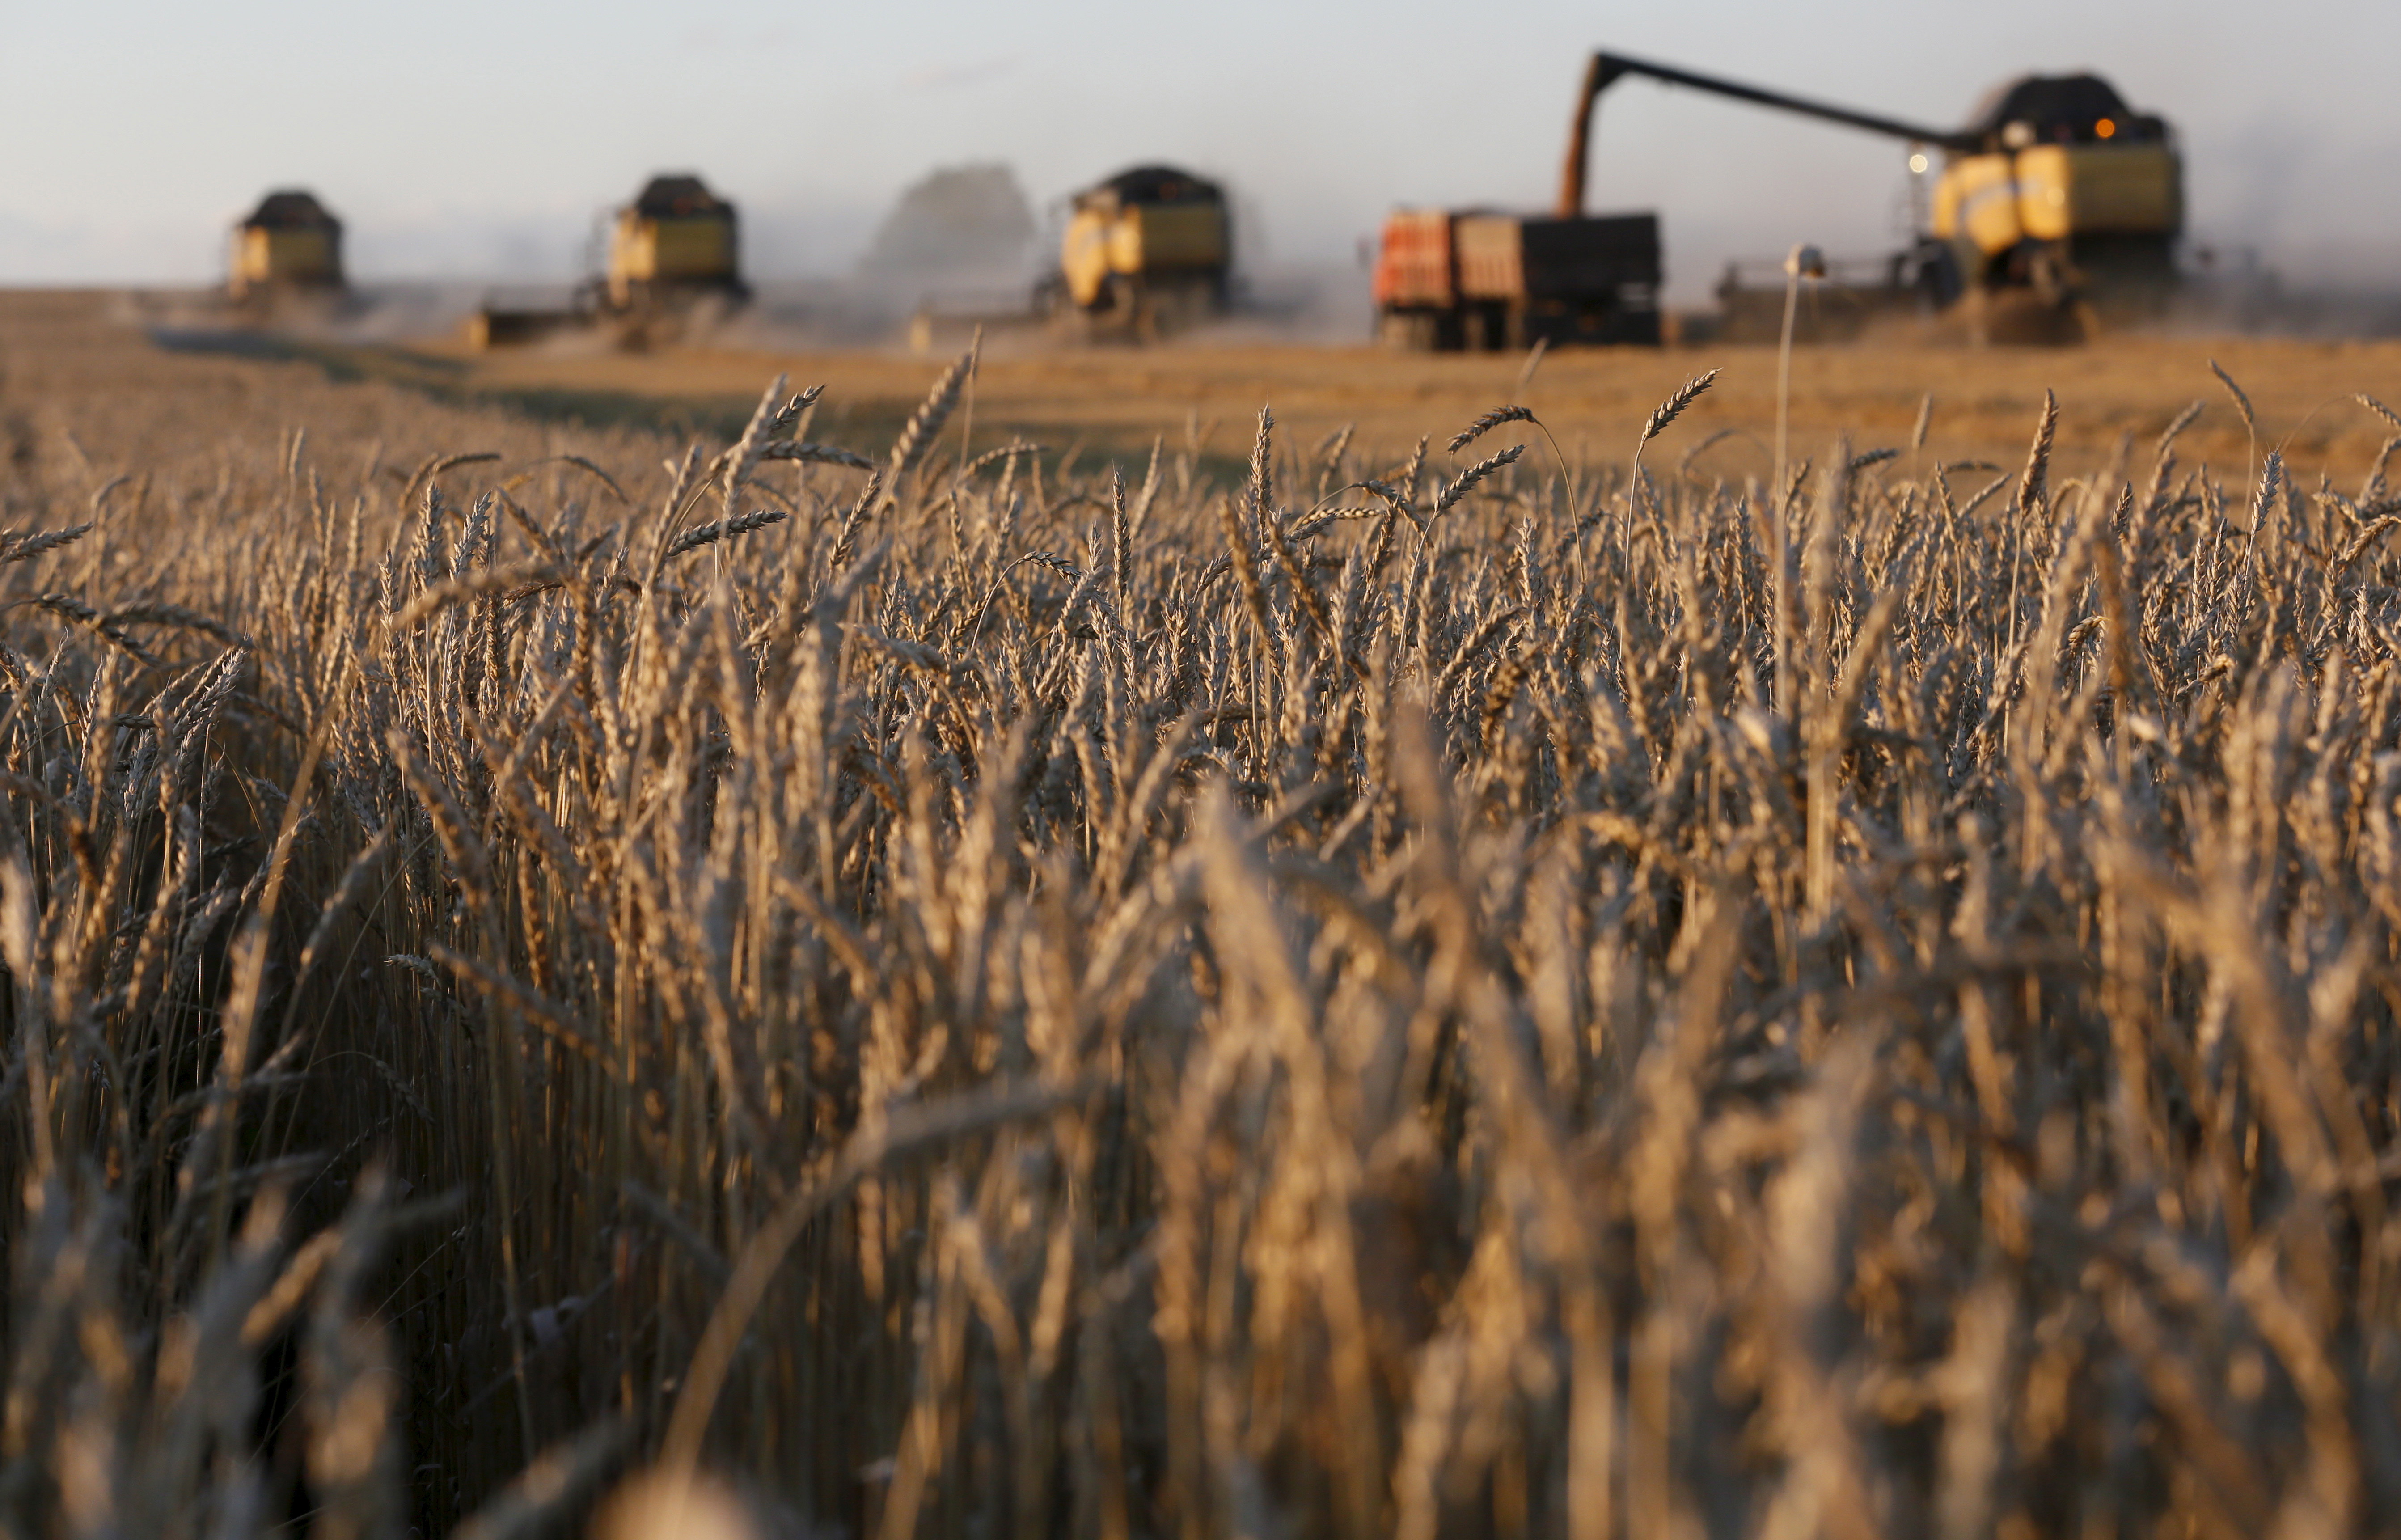 Combine harvesters work on wheat field of Solgonskoye farming company near village of Talniki